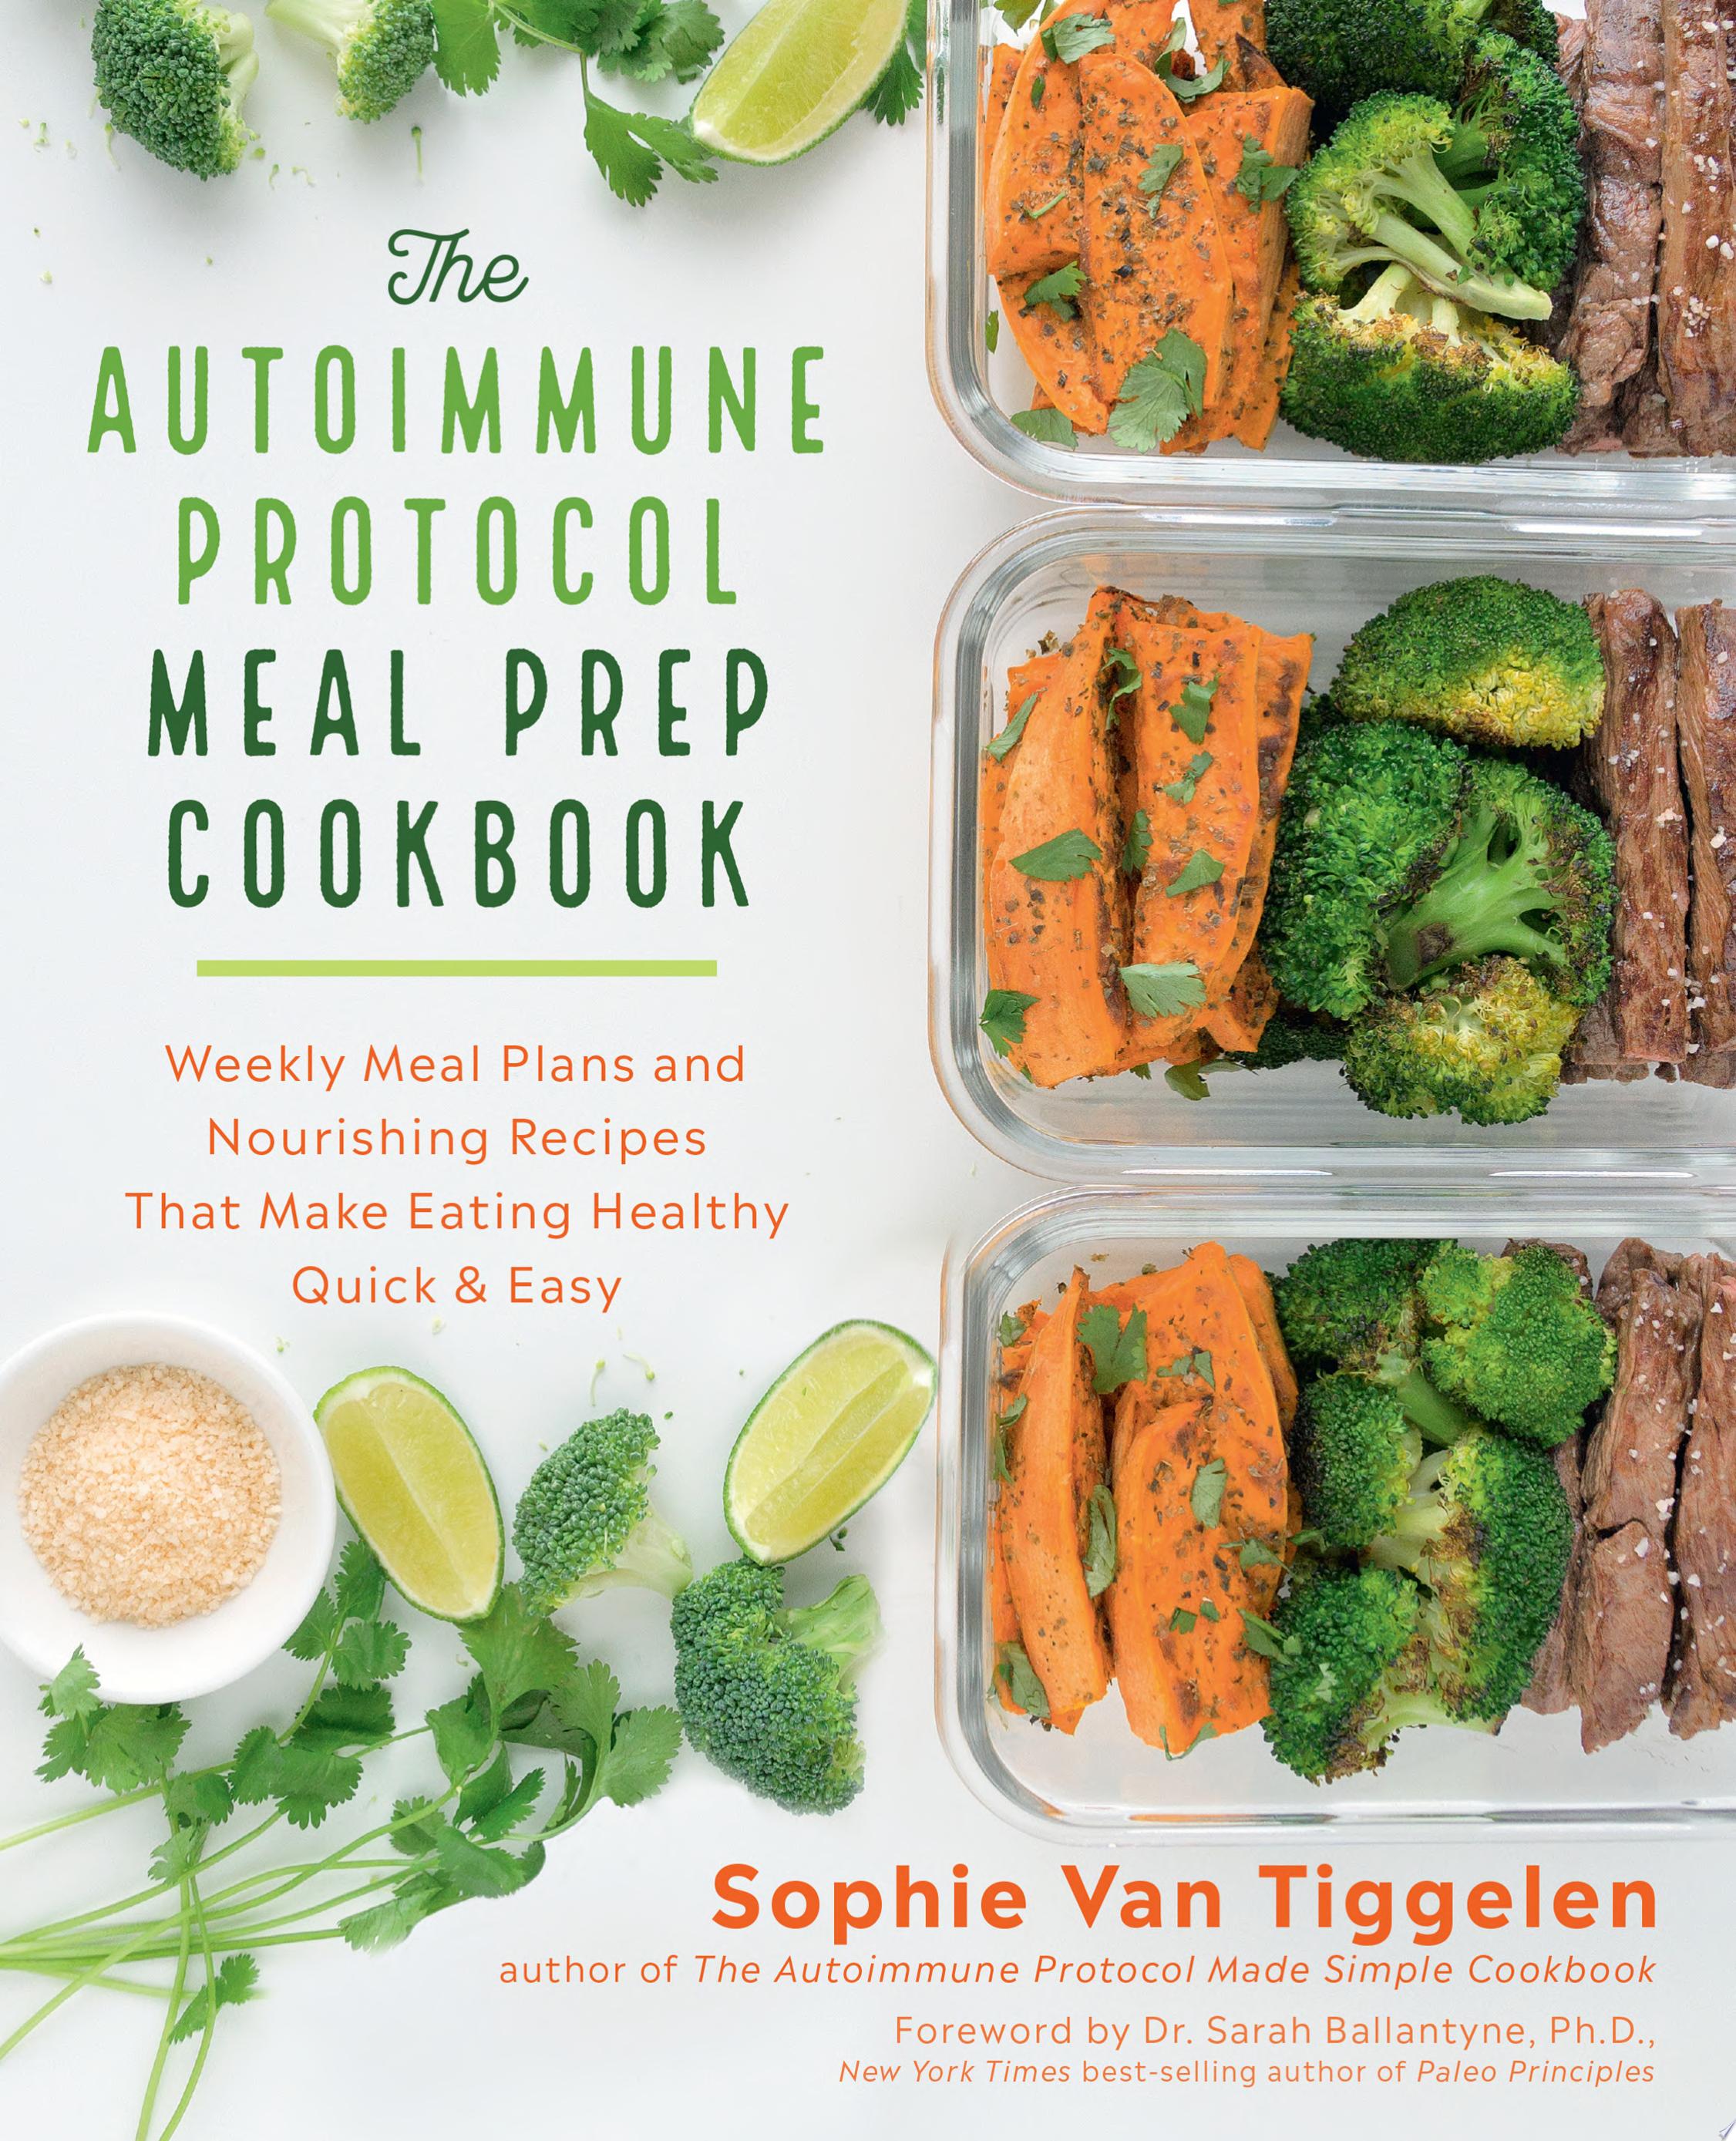 Image for "The Autoimmune Protocol Meal Prep Cookbook"